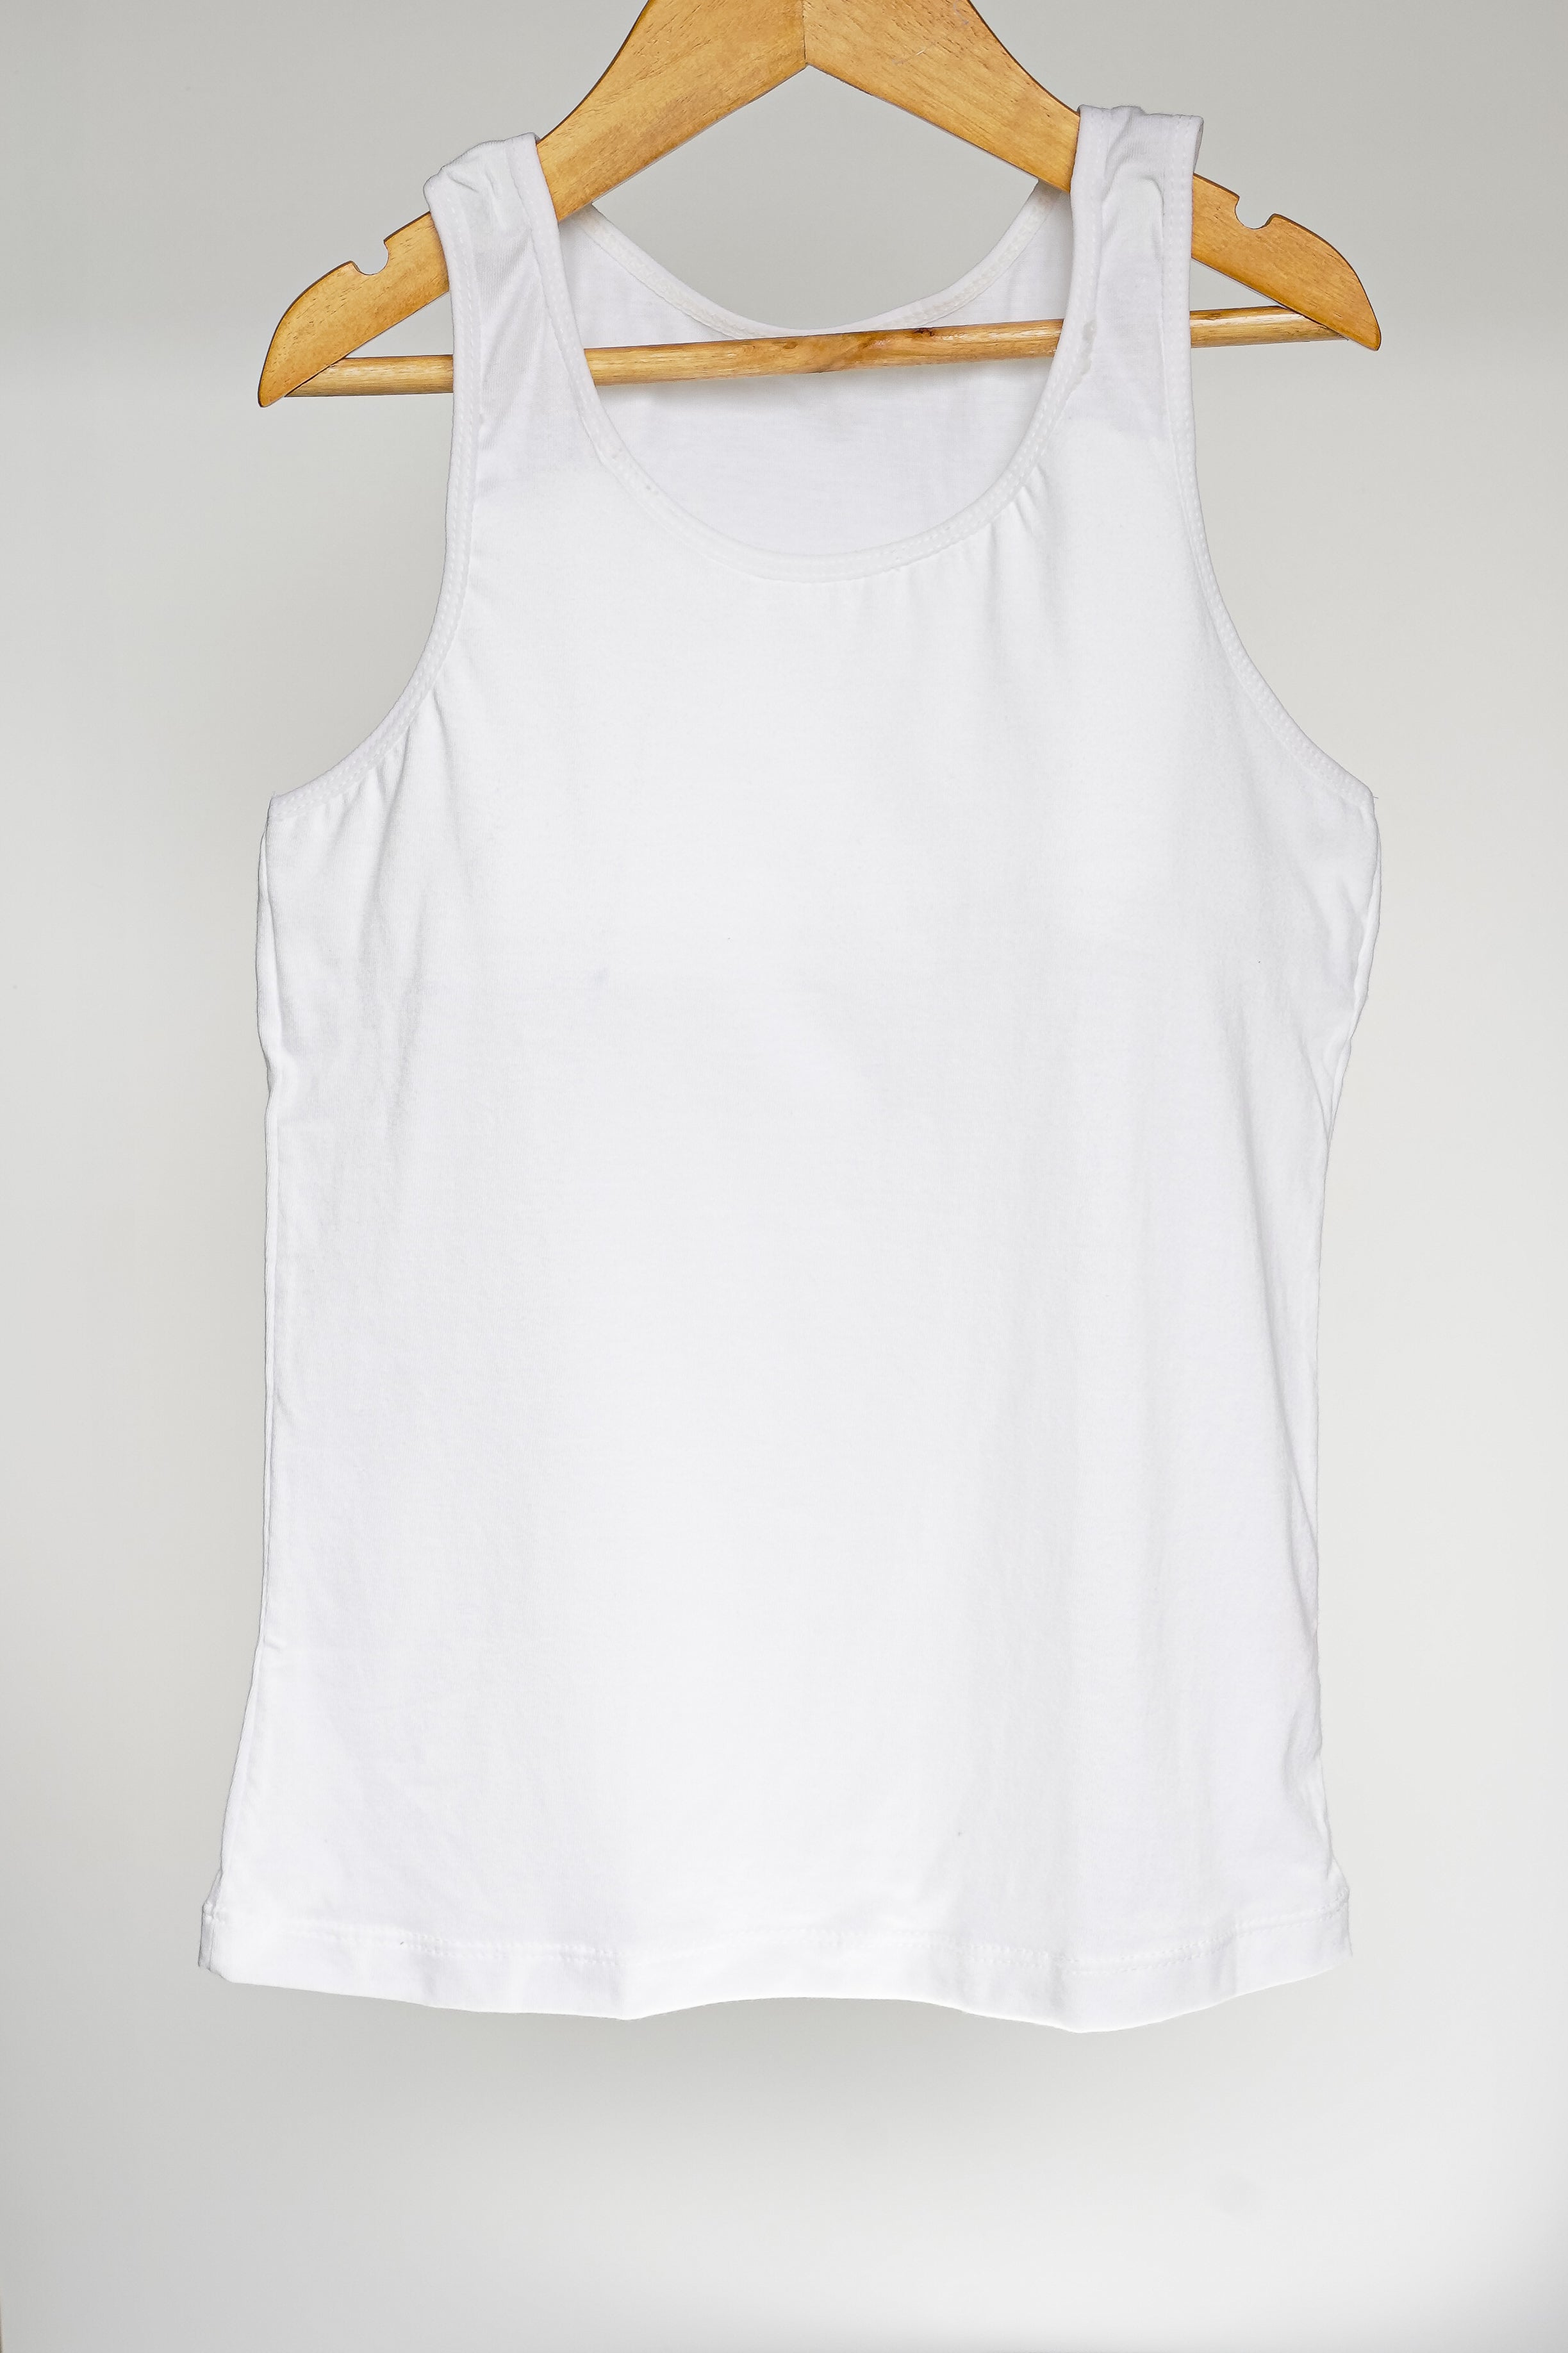 Plain White Sando Shirt With Pads (SA-06) – Kiddie Closet PHL